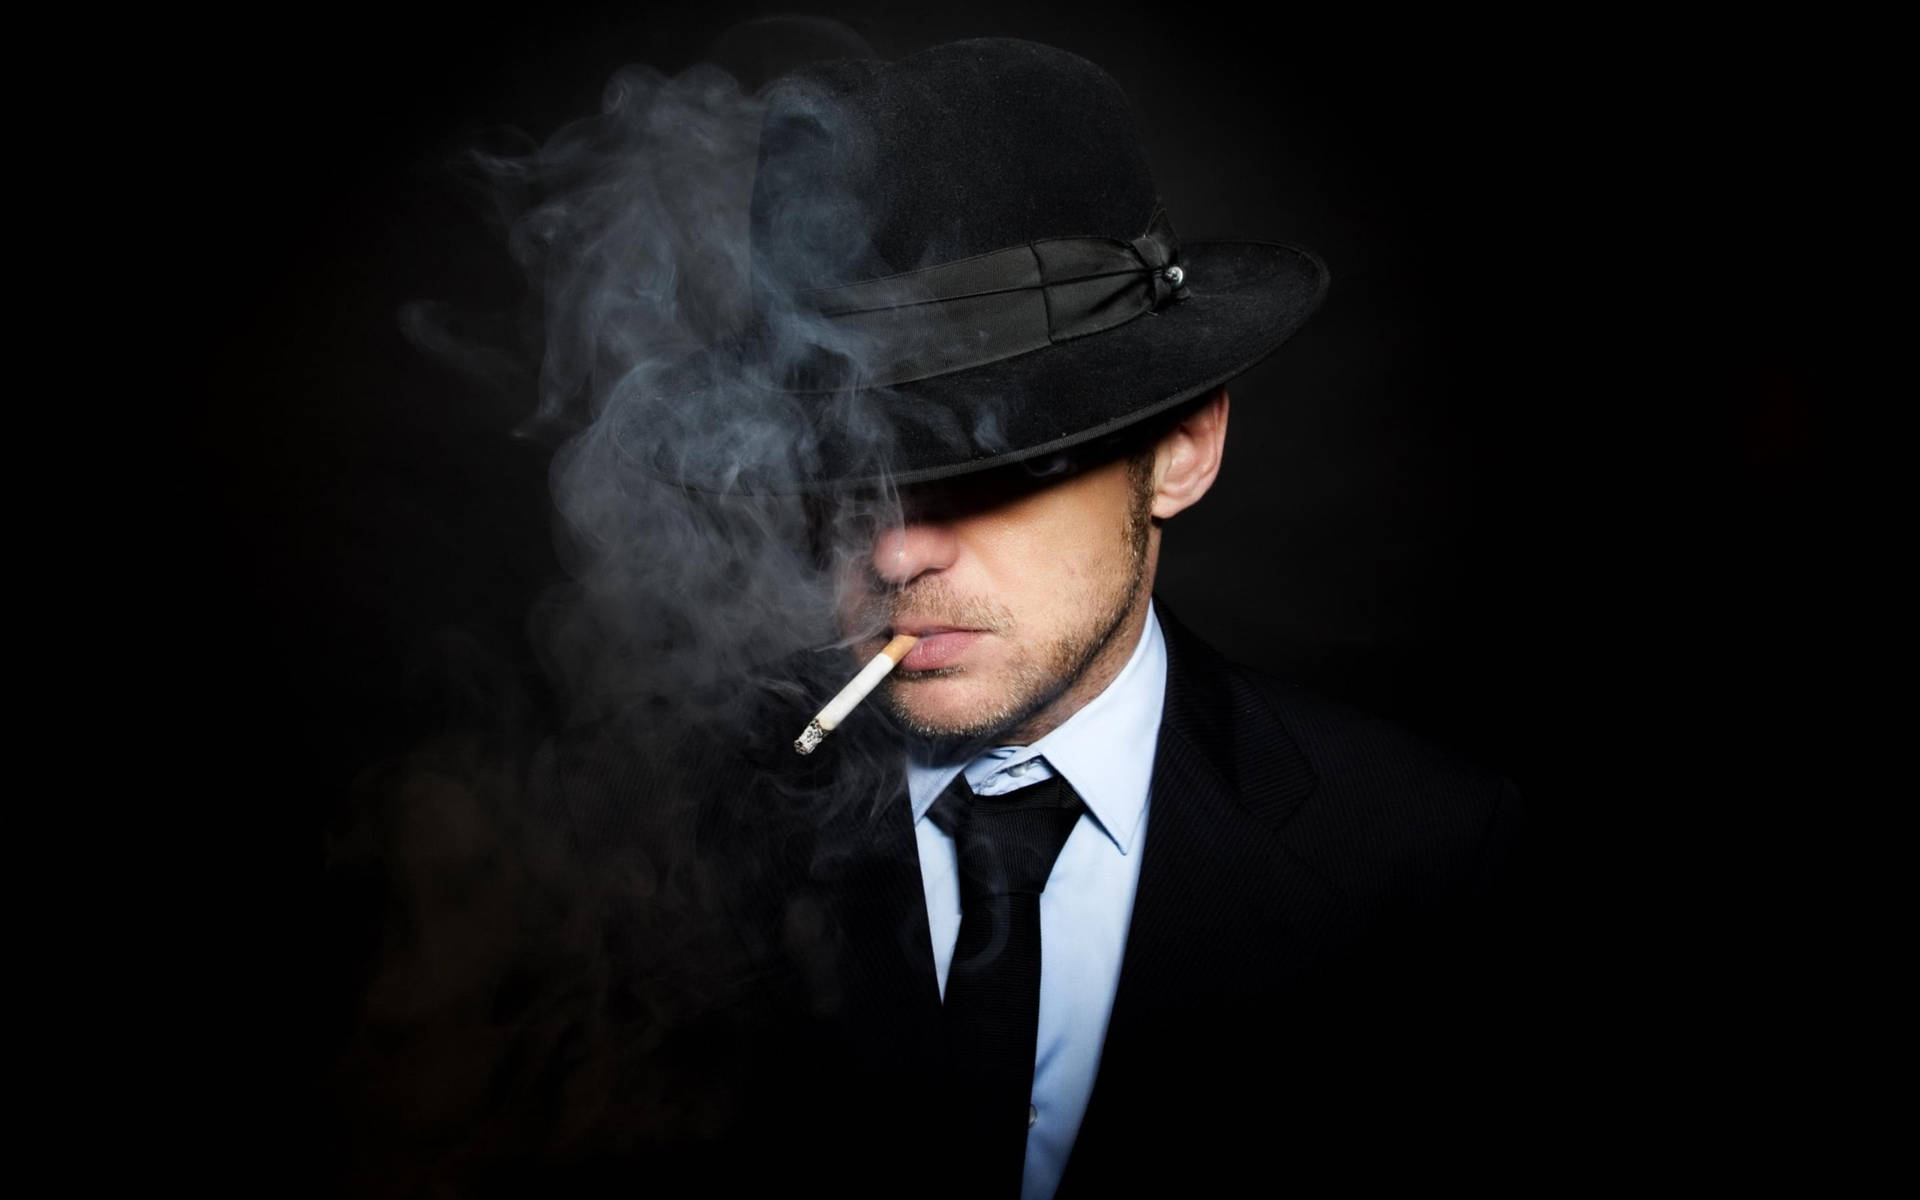 Smoking Mafia In Black Suit Wallpaper